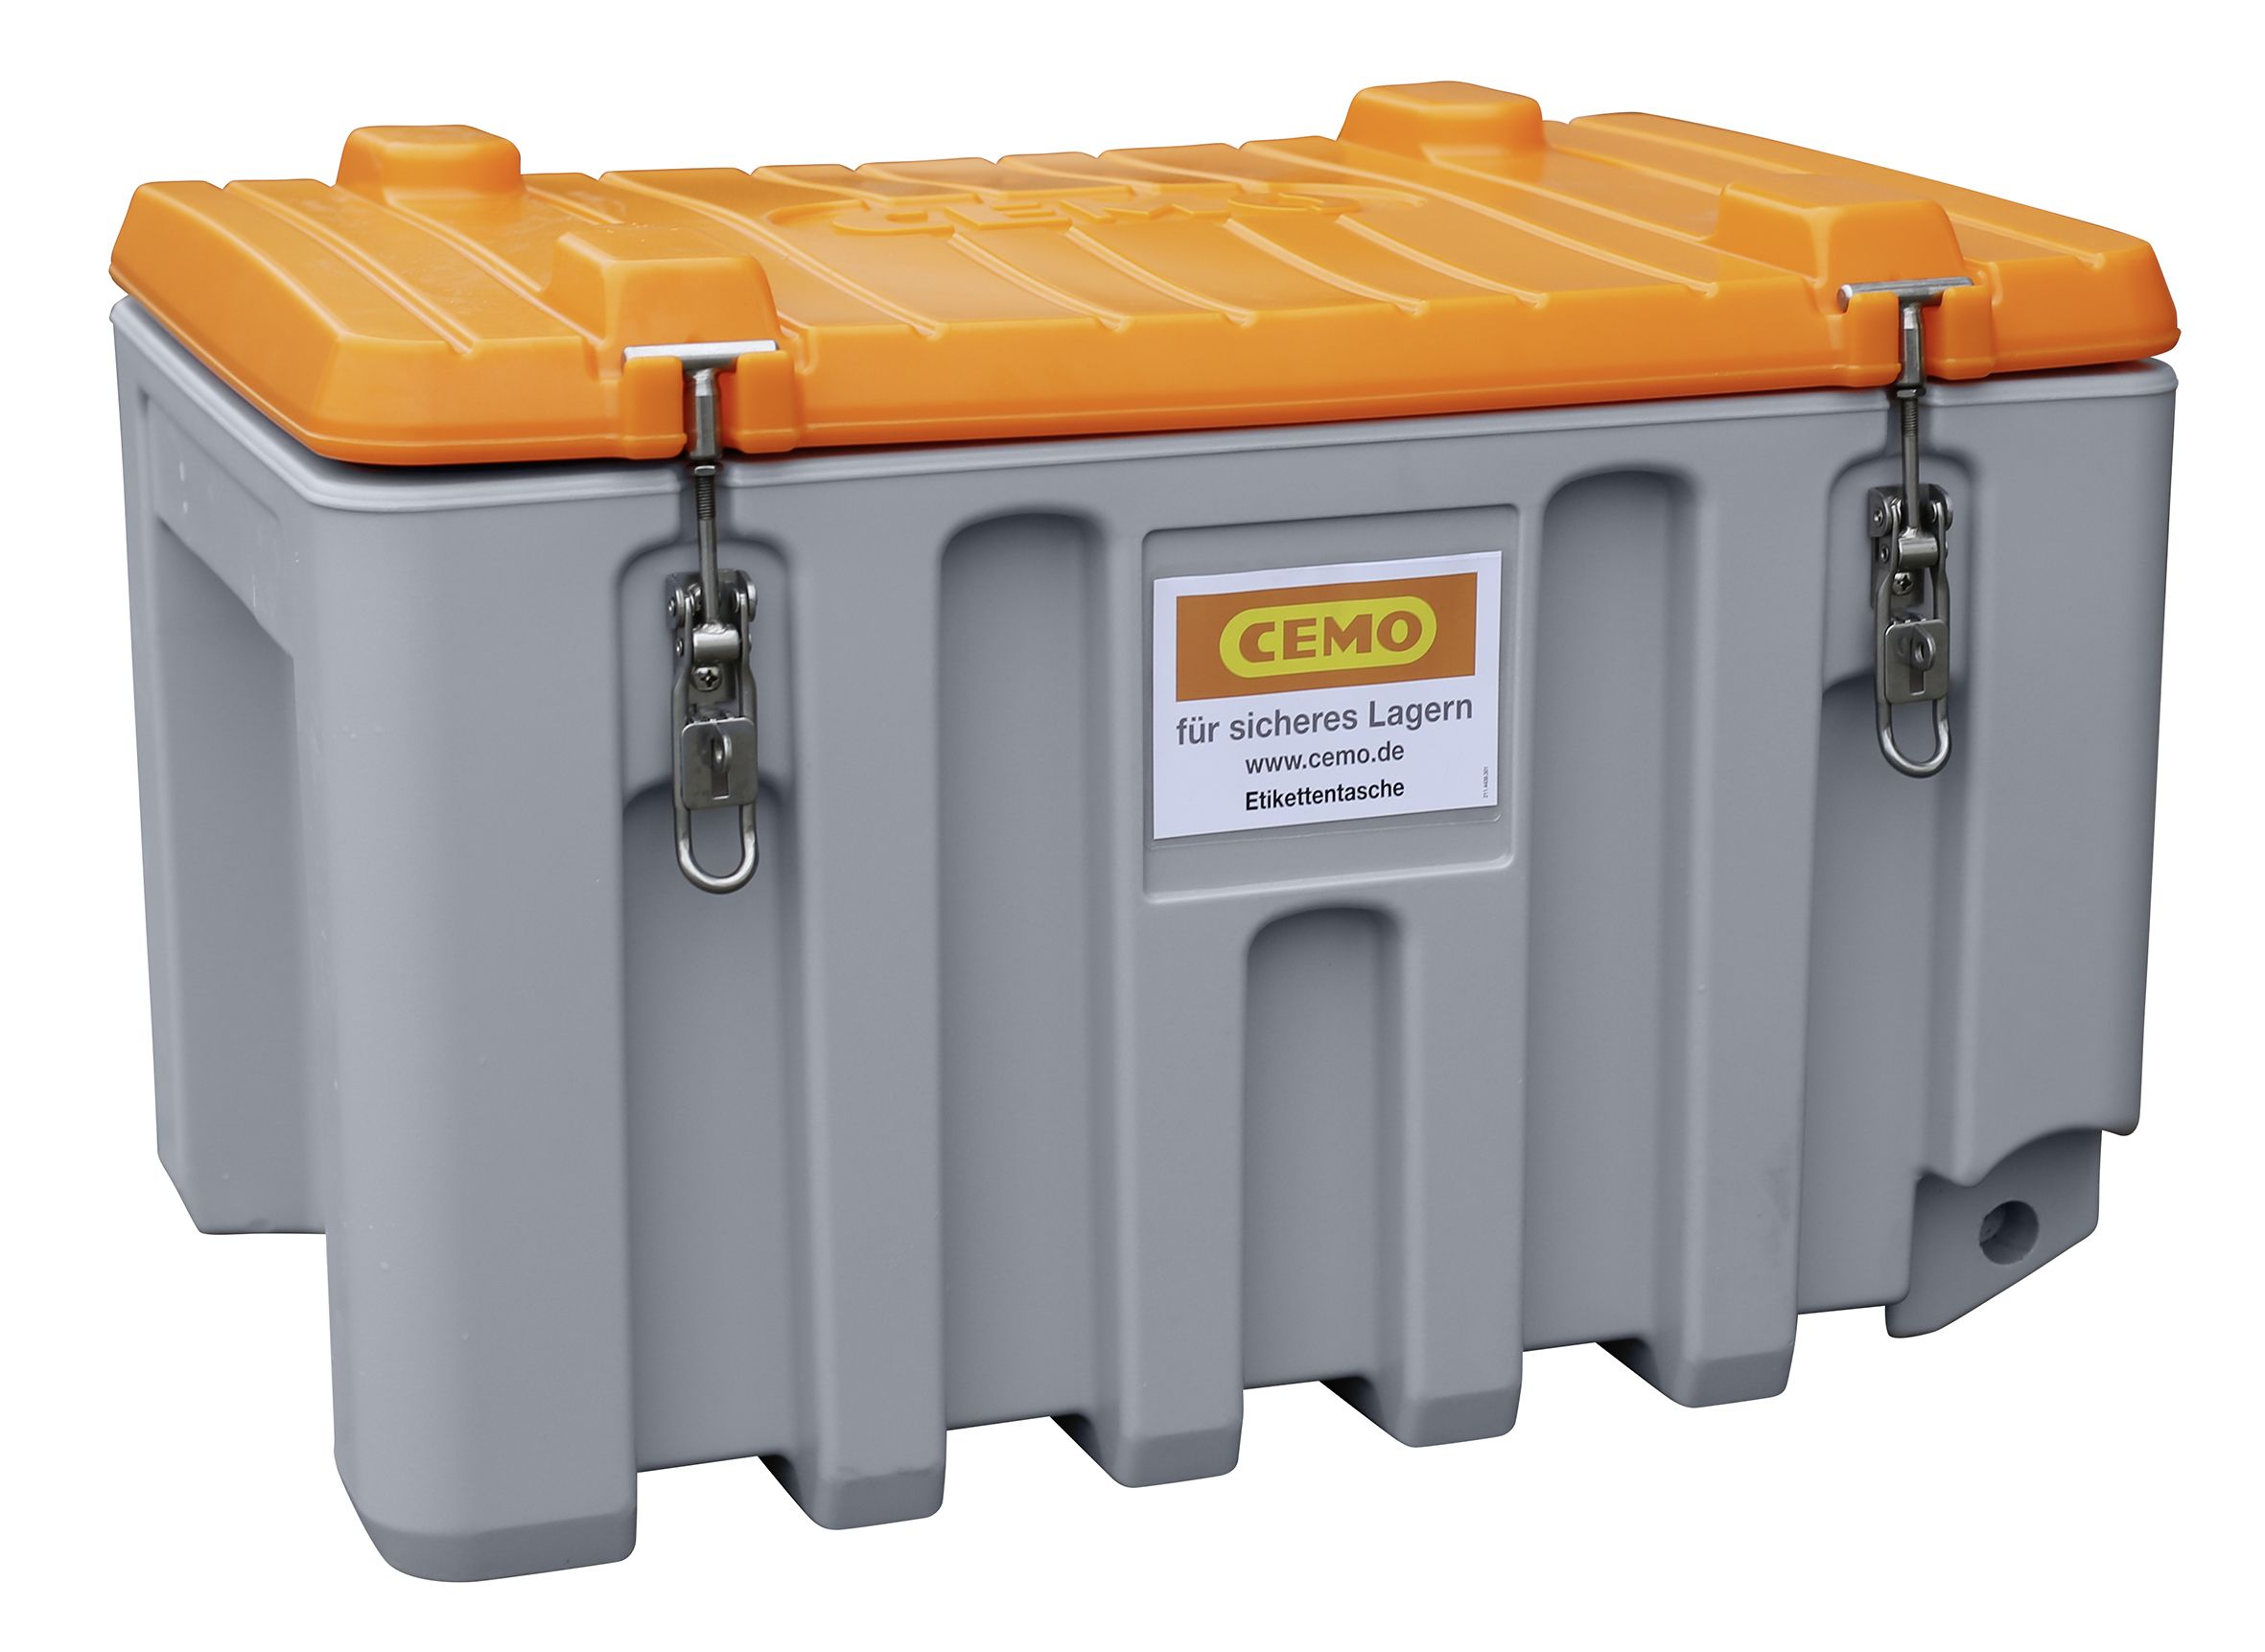 CEMO CEMbox 150 l, grau/orange - 10330